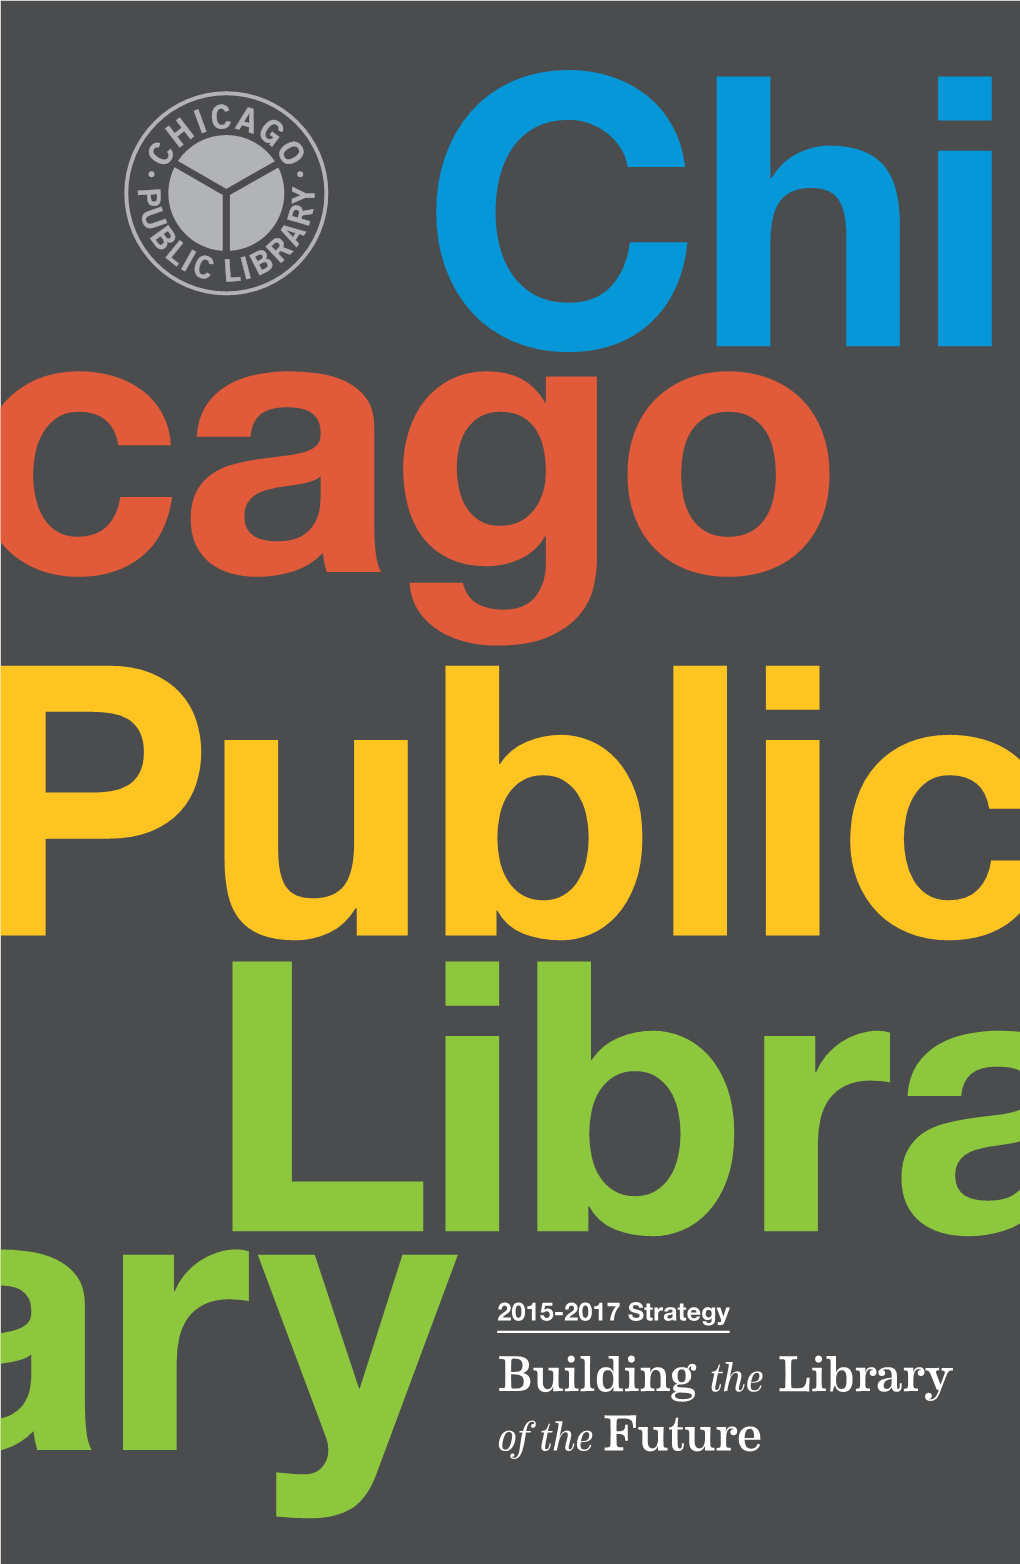 Chicago Public Library Strategic Plan